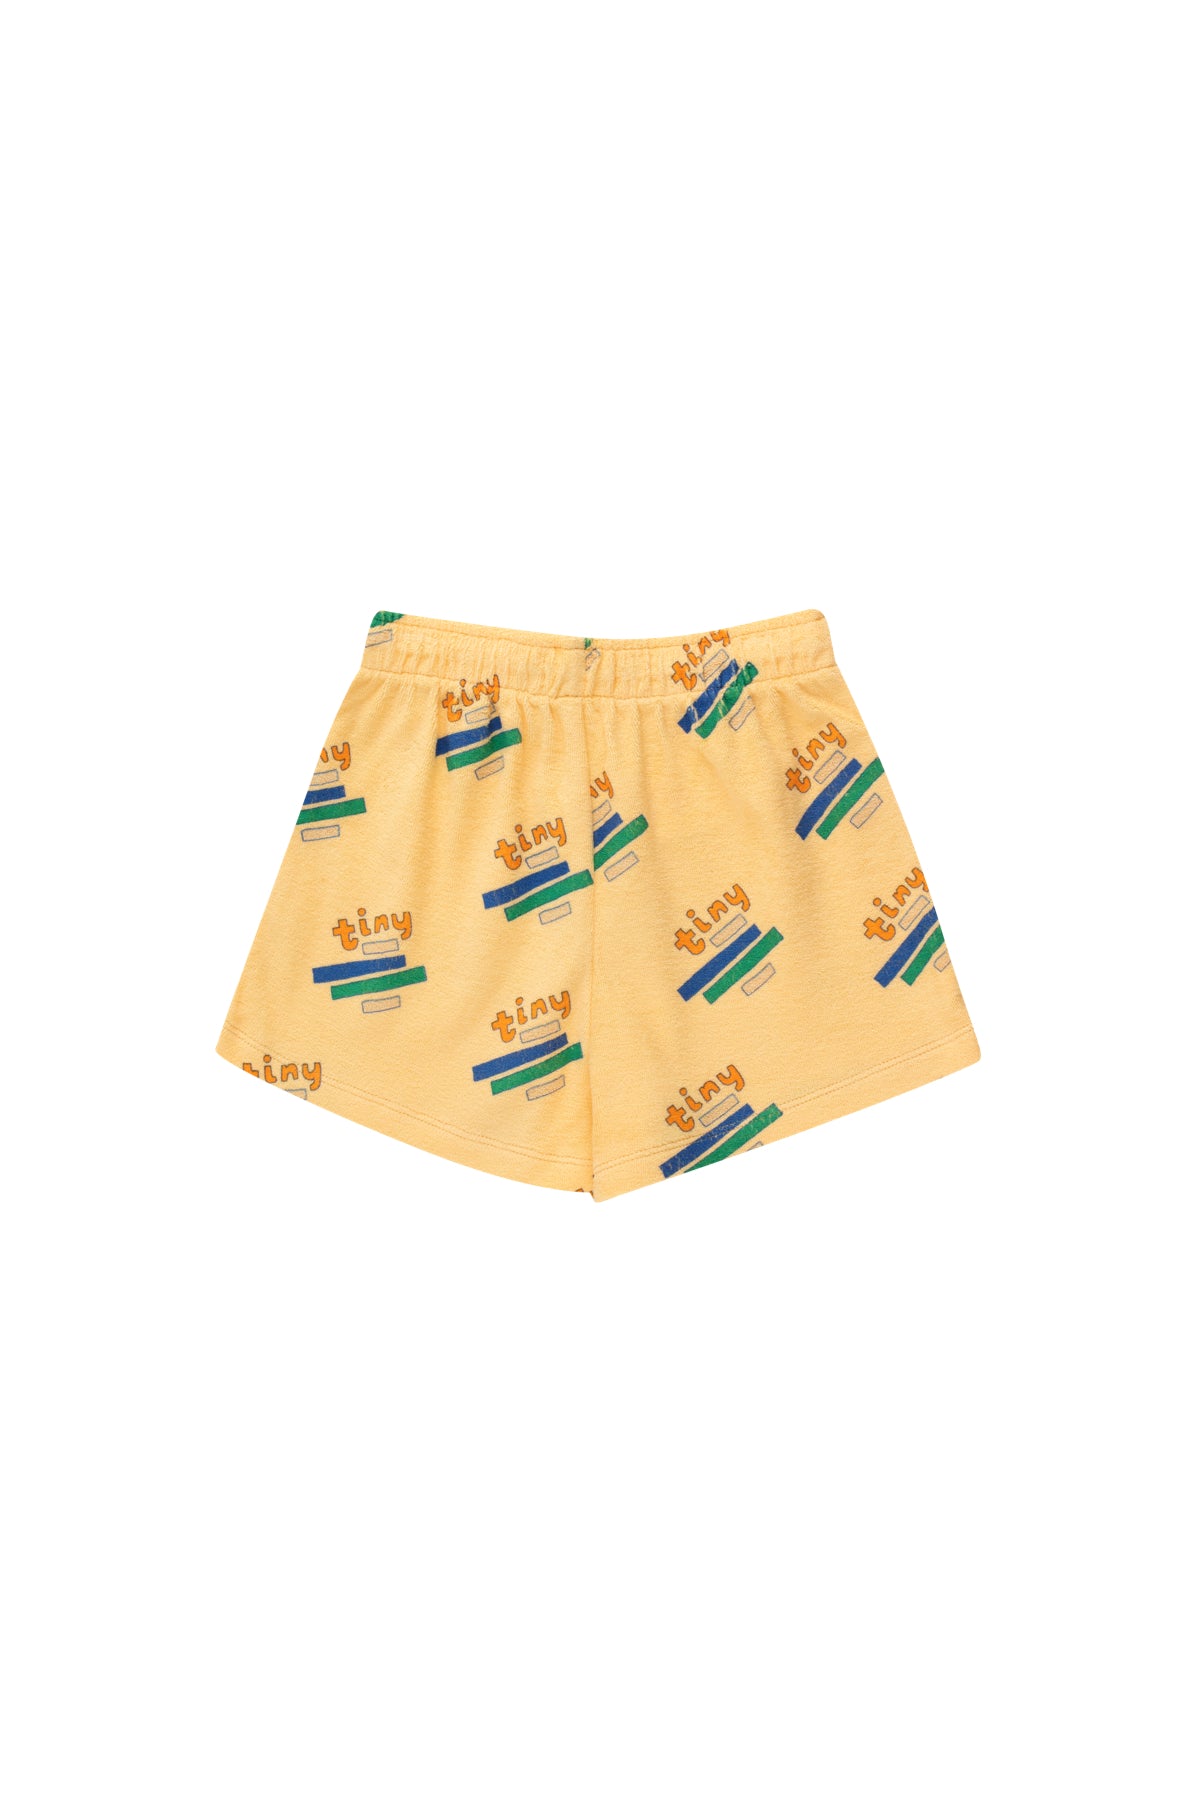 Tiny Cottons - tiny shorts - mellow yellow